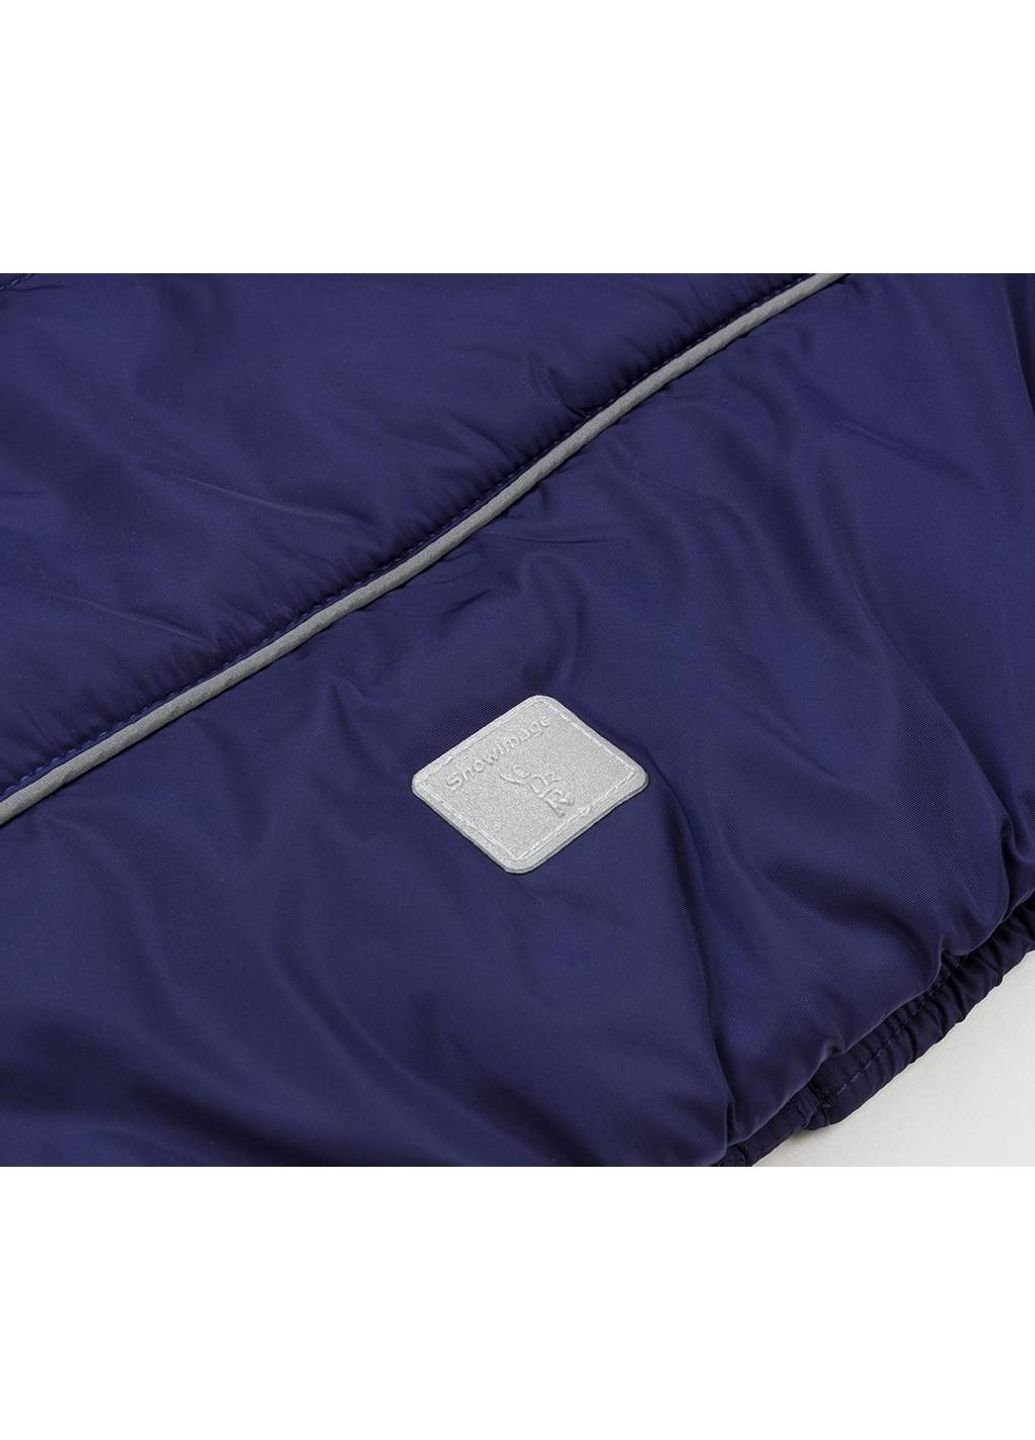 Фіолетова демісезонна куртка з капюшоном (sicmy-g306-128b-blue) Snowimage